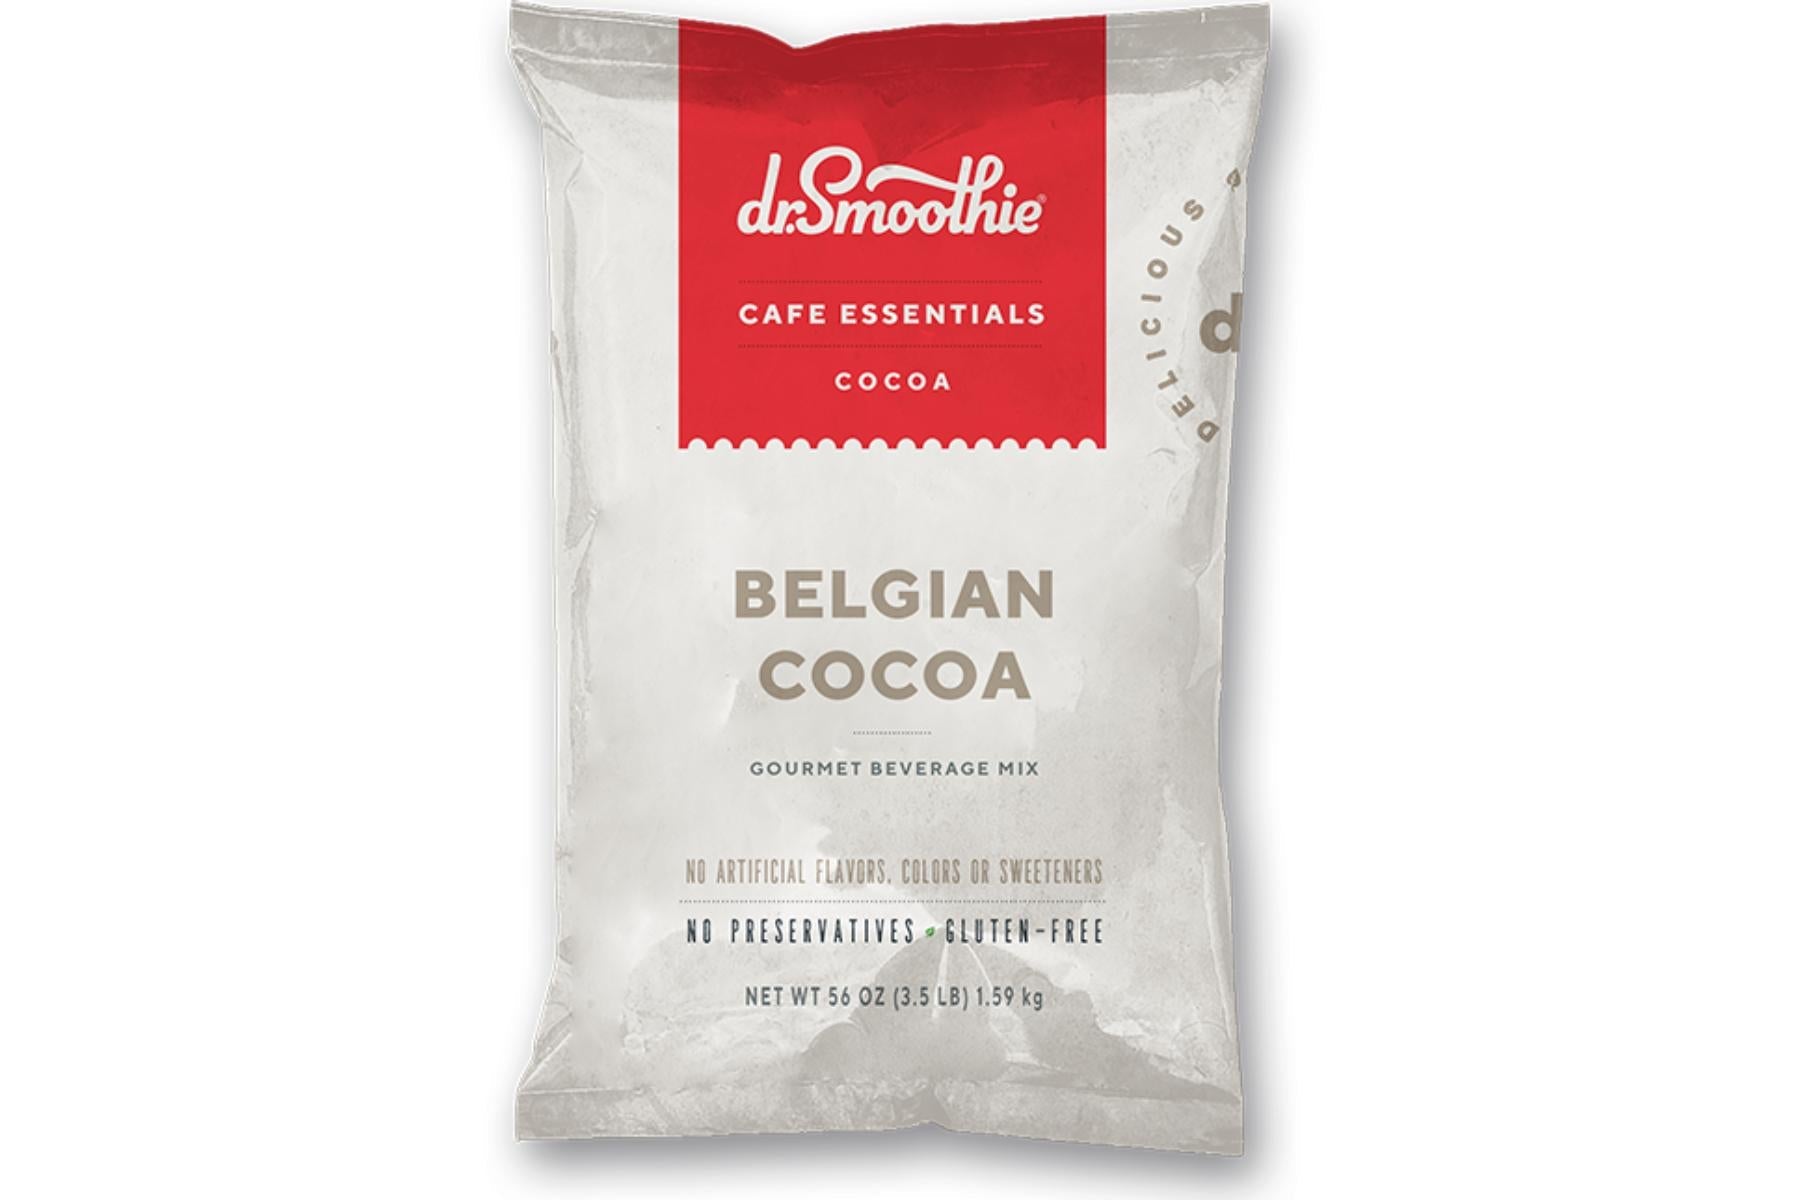 Dr. Smoothie Cafe Essentials Cocoa - 3.5lb Bulk Bag: Belgian Cocoa